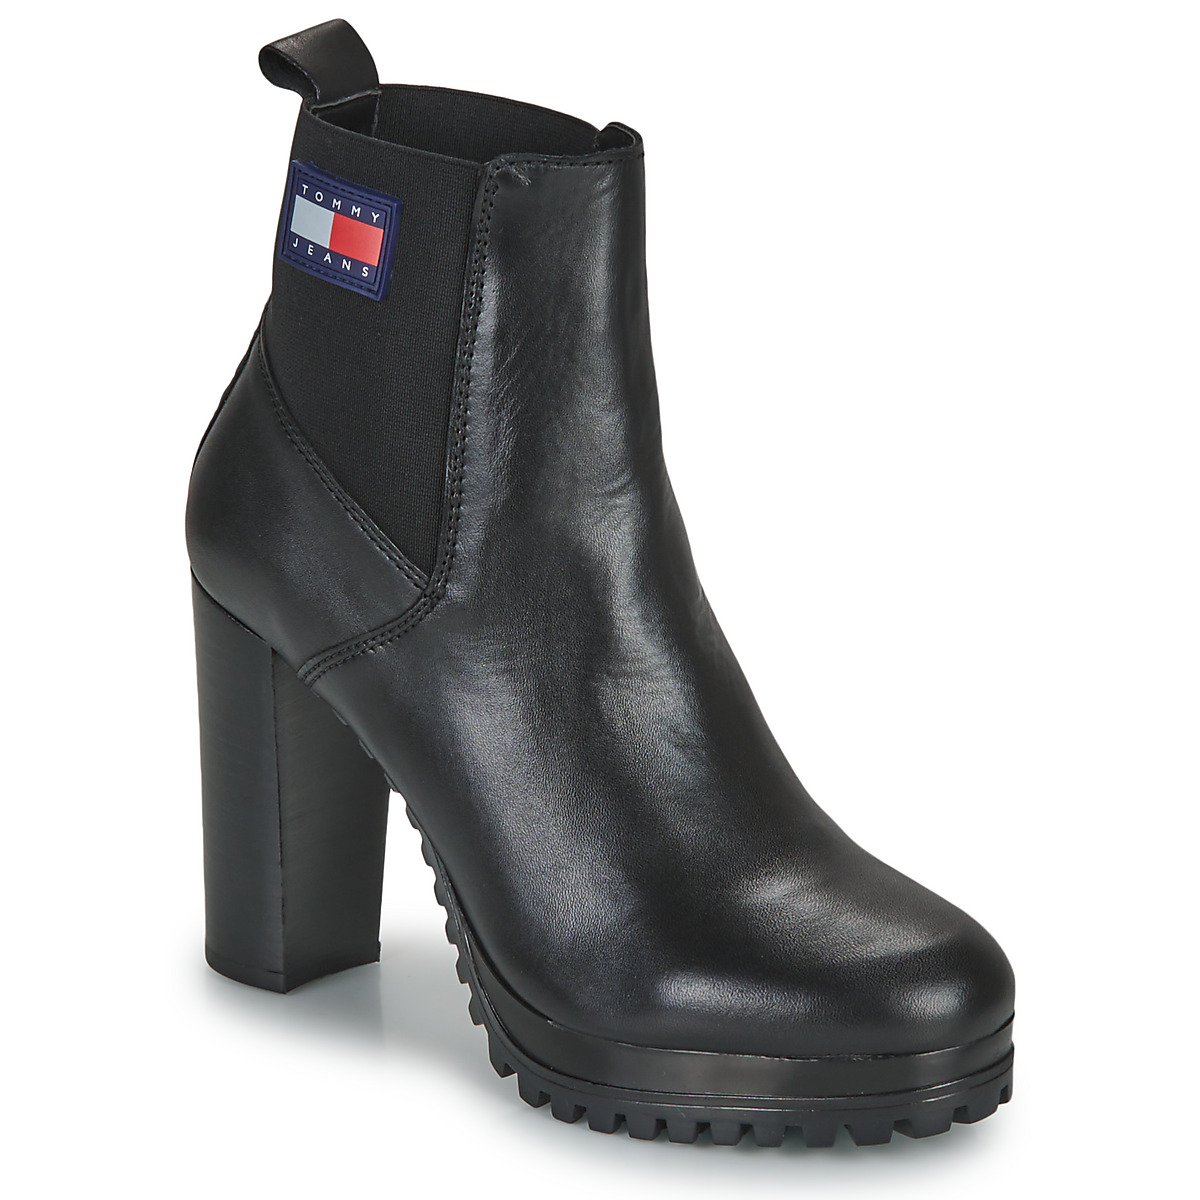 Tommy Jeans Noir Essentials High Heel Boot 6HRFnReA